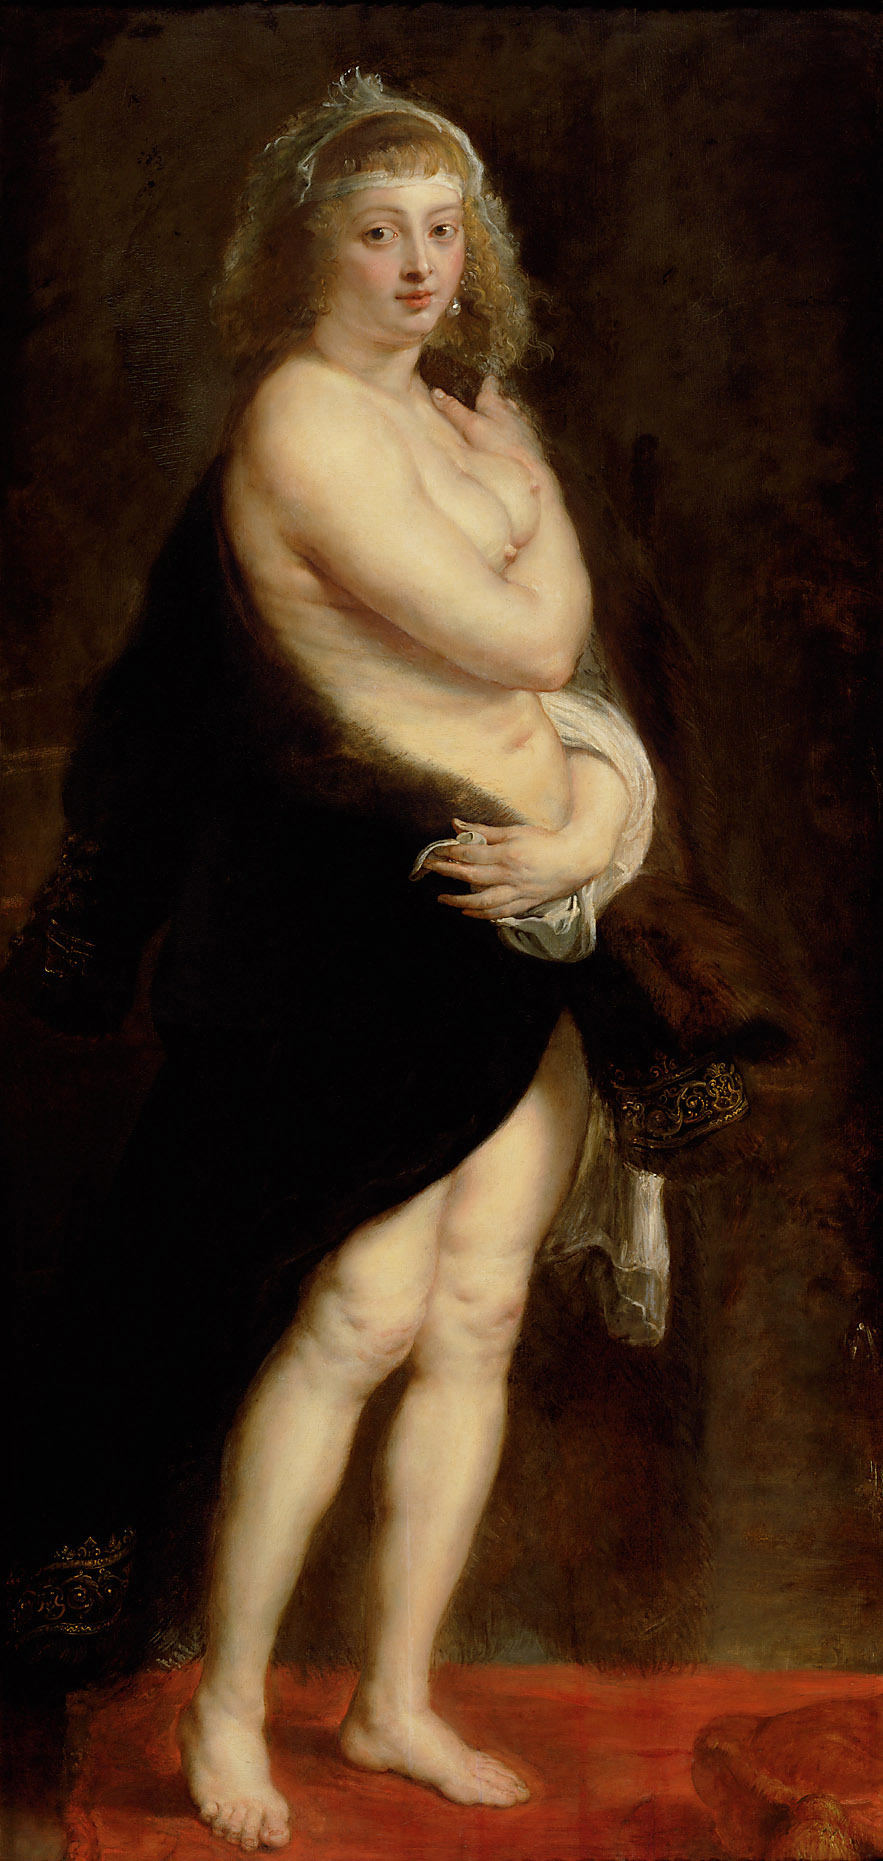 Helena Fourment ("Das Fell") by Peter Paul Rubens - Etwa 1636/1638 - 176 x 83 cm Kunsthistorisches Museum